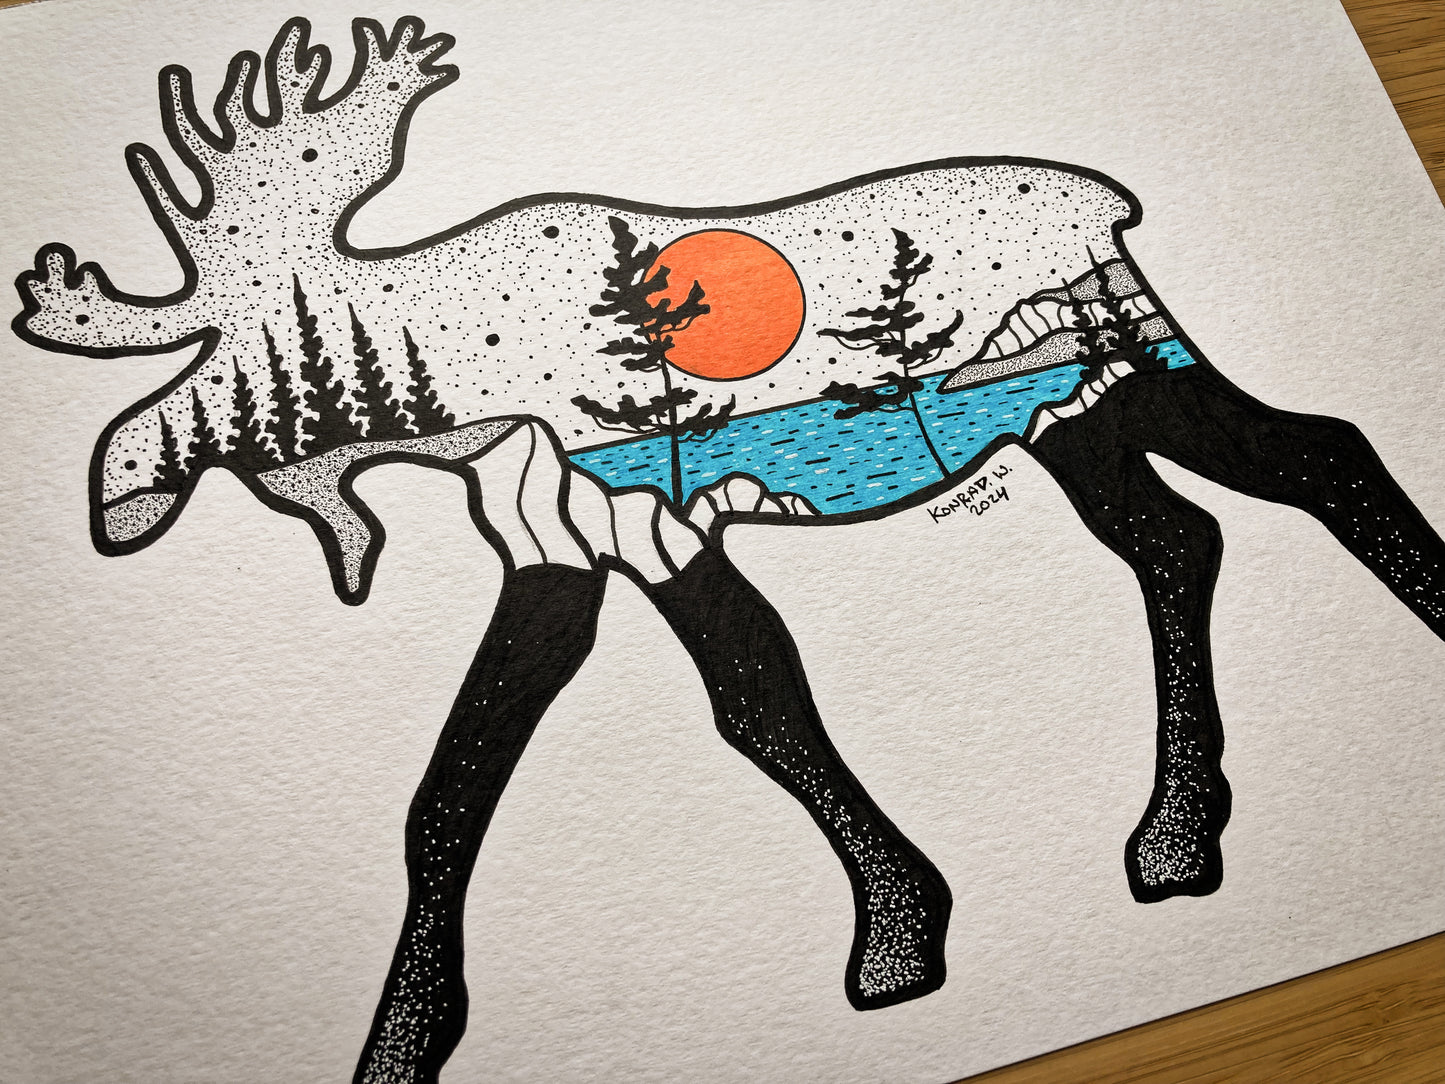 Moose Silhouette - ORIGINAL 11x14 Pen and Ink Illustration